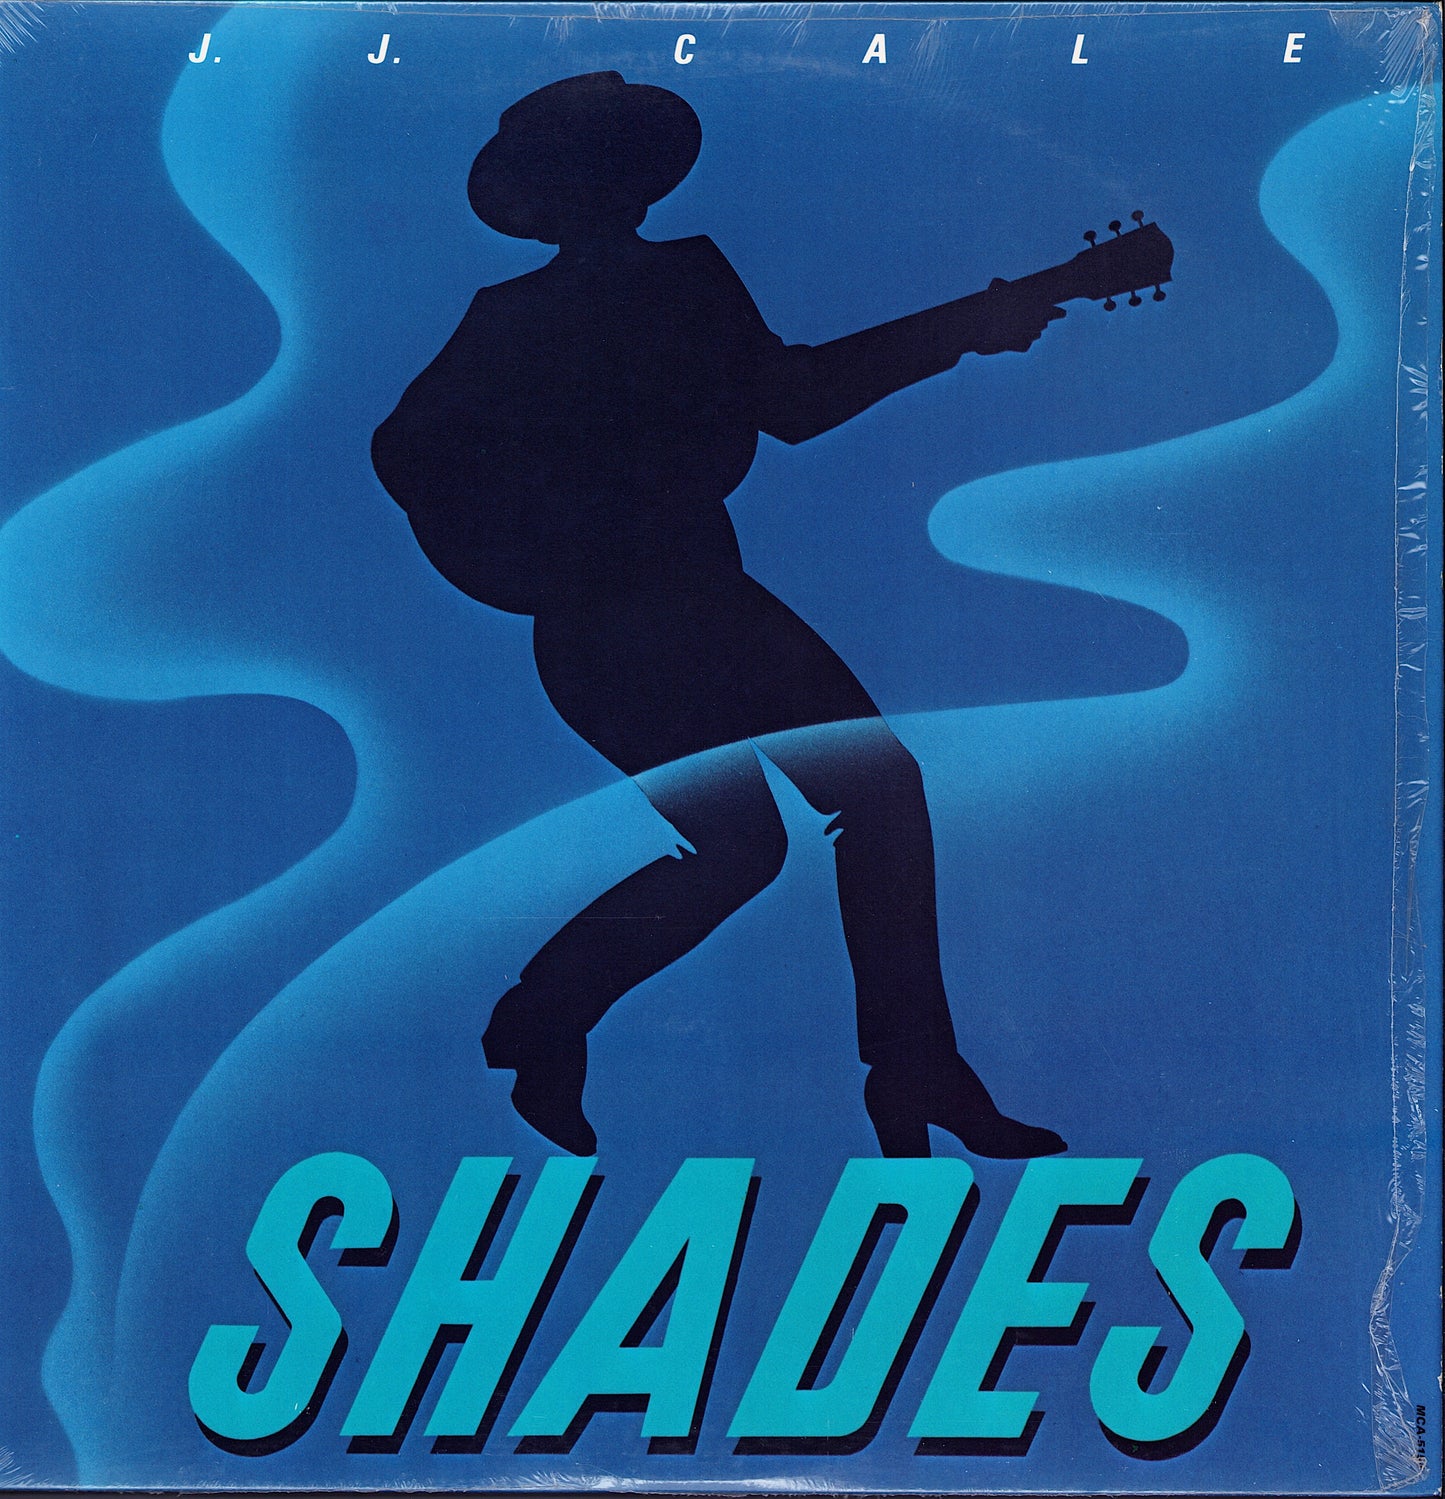 J.J. Cale ‎- Shades Vinyl LP US